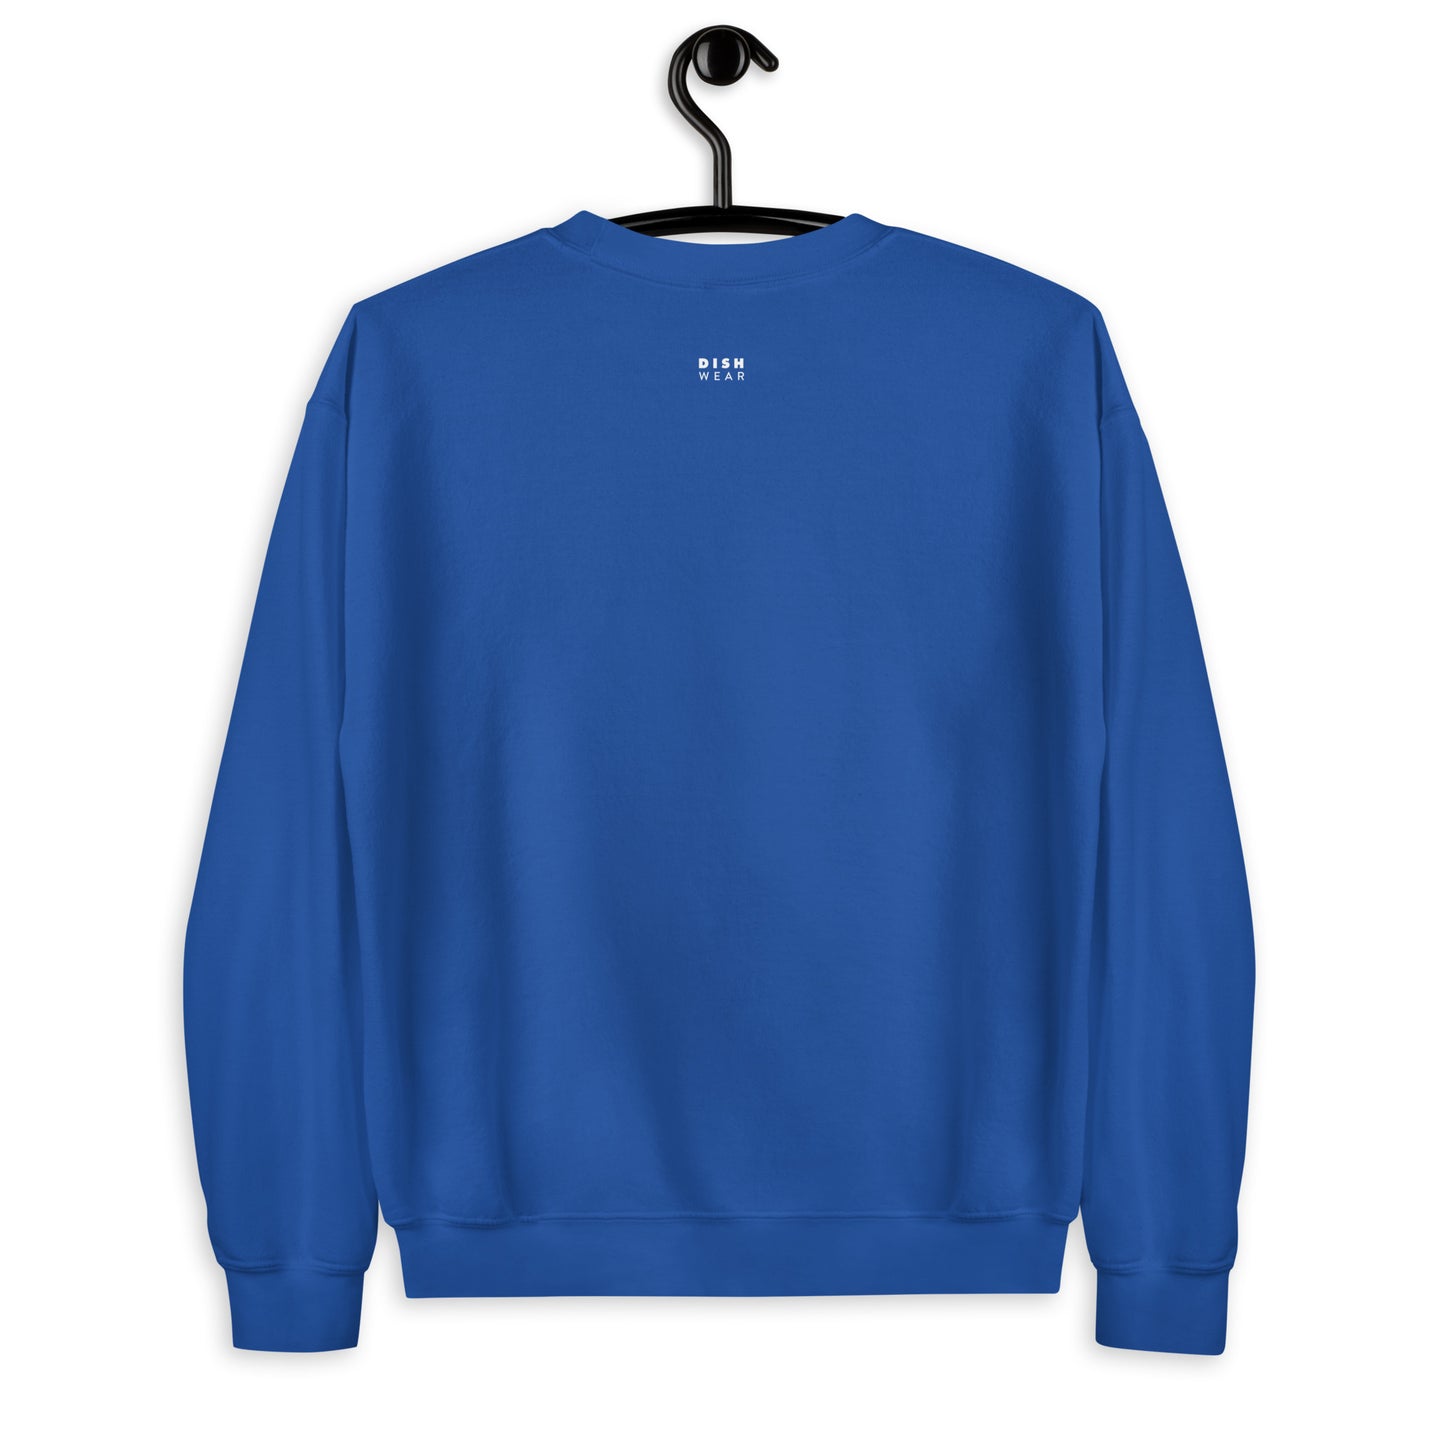 Peppermint Sweatshirt - Straight Font